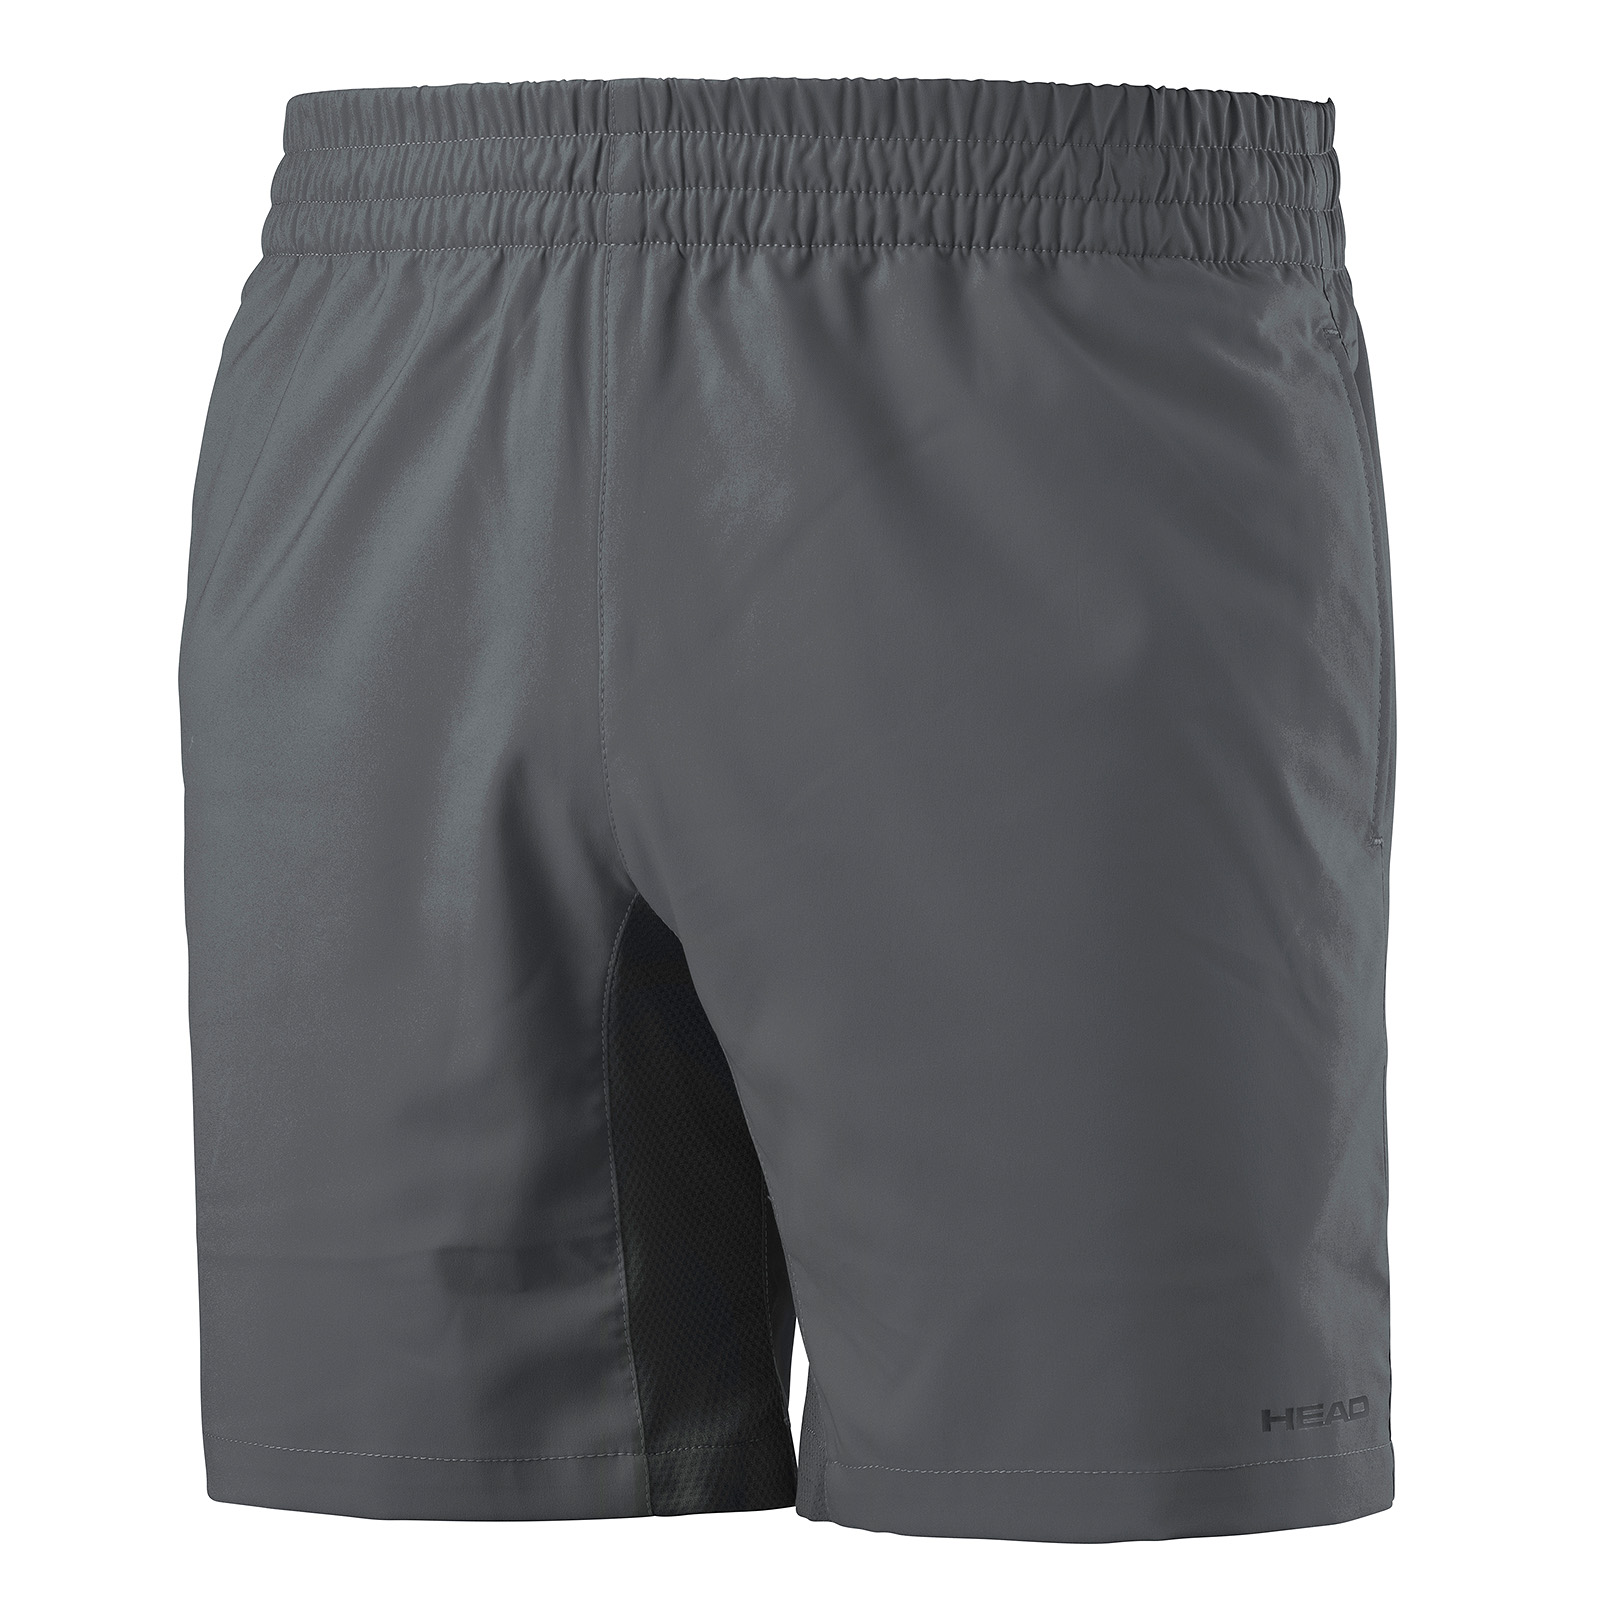 Club Shorts - Cool Sport